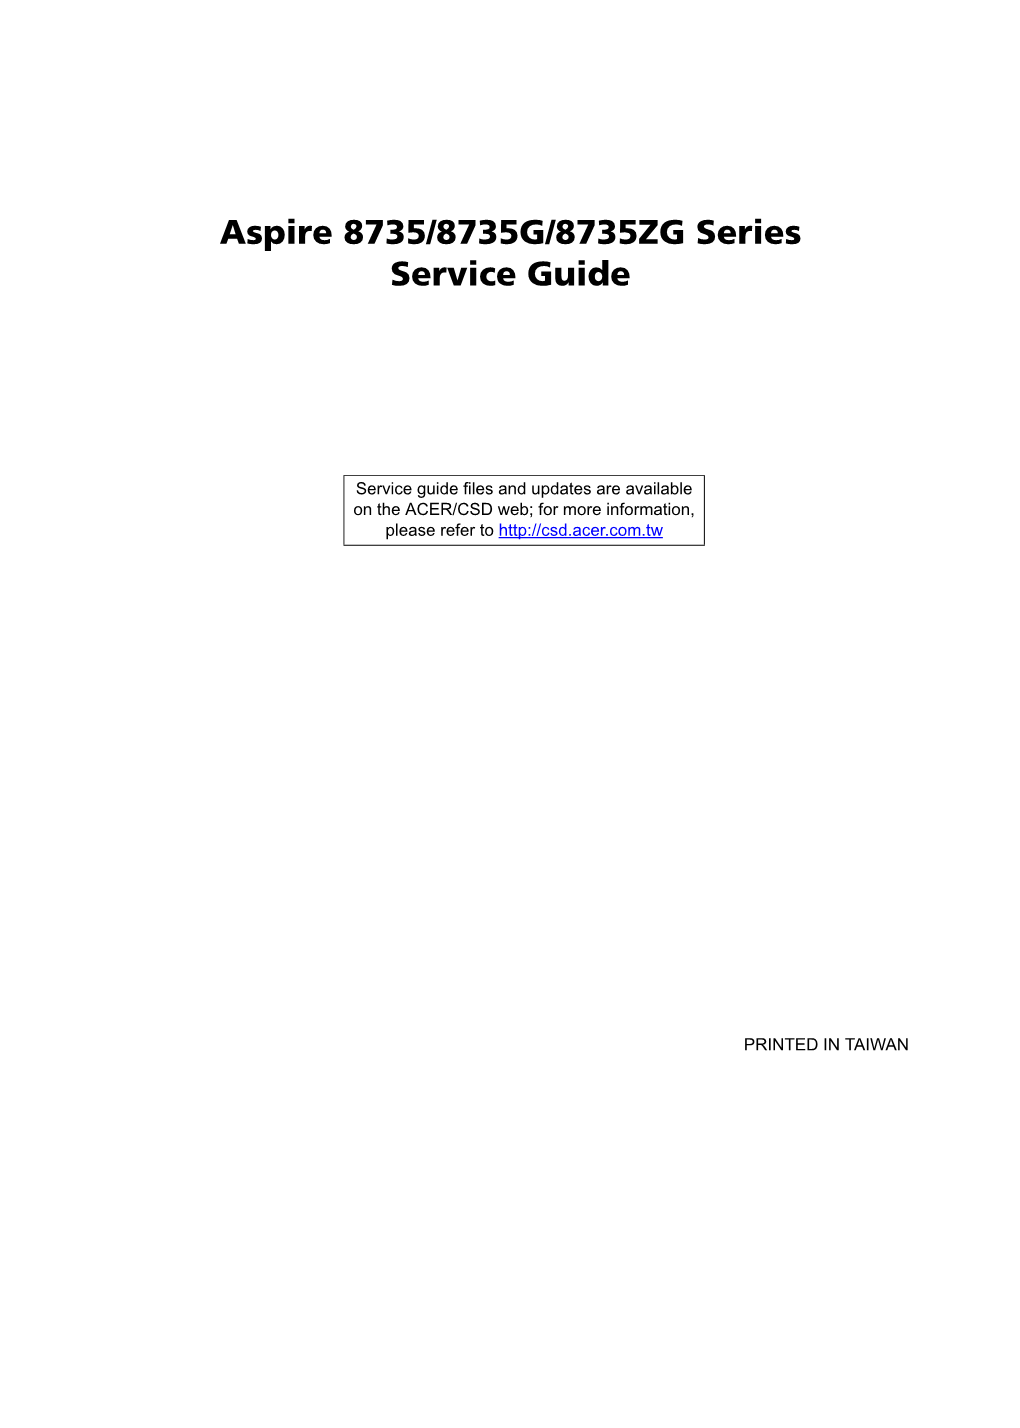 Aspire 8735/8735G/8735ZG Series Service Guide